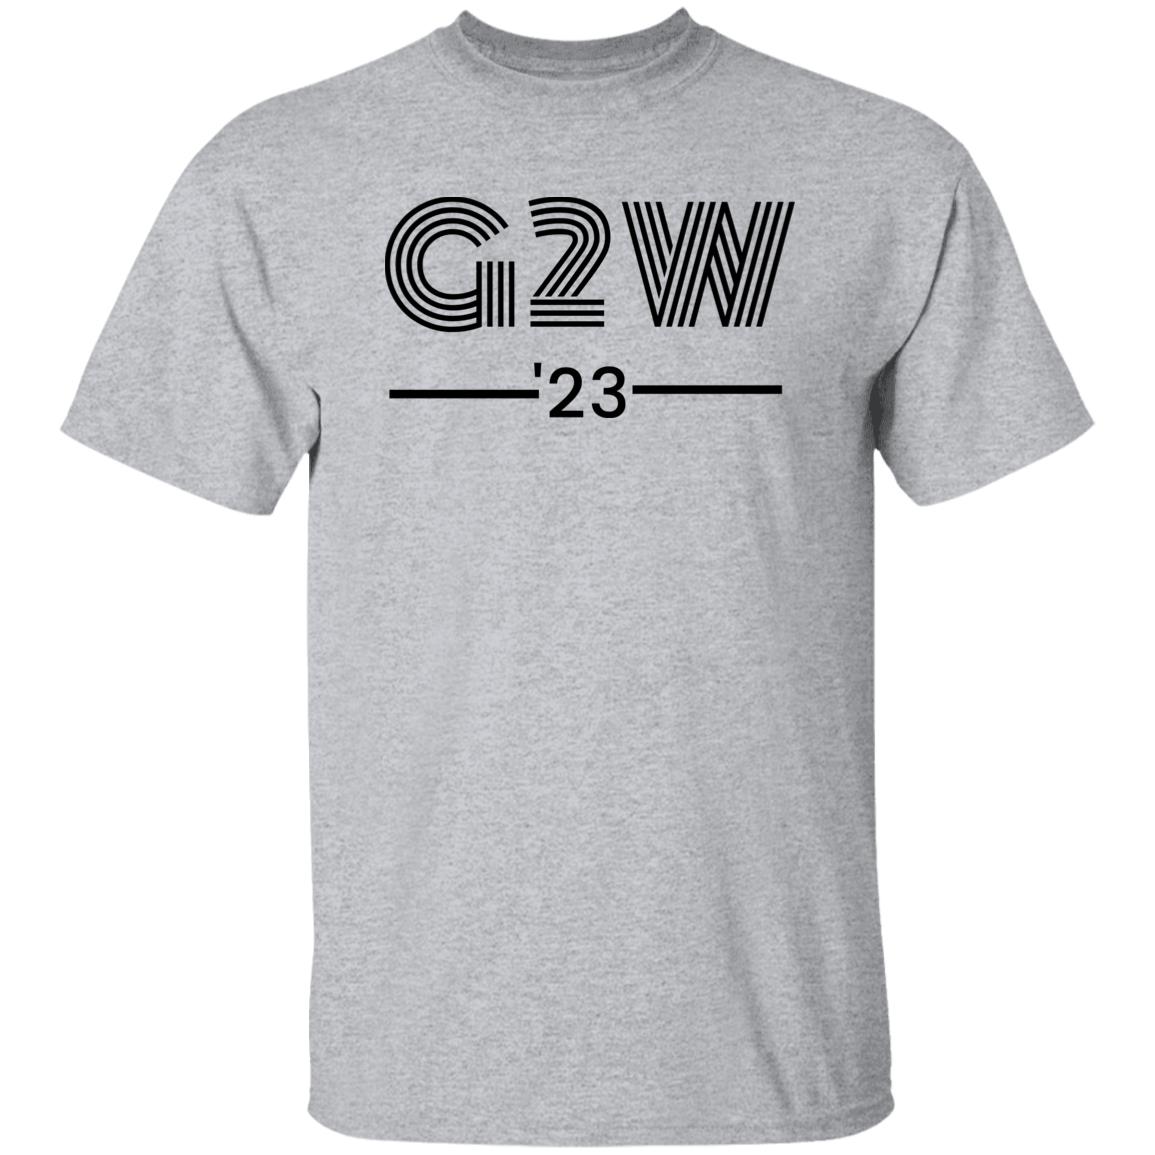 Triple G2W Black Unisex T-Shirt